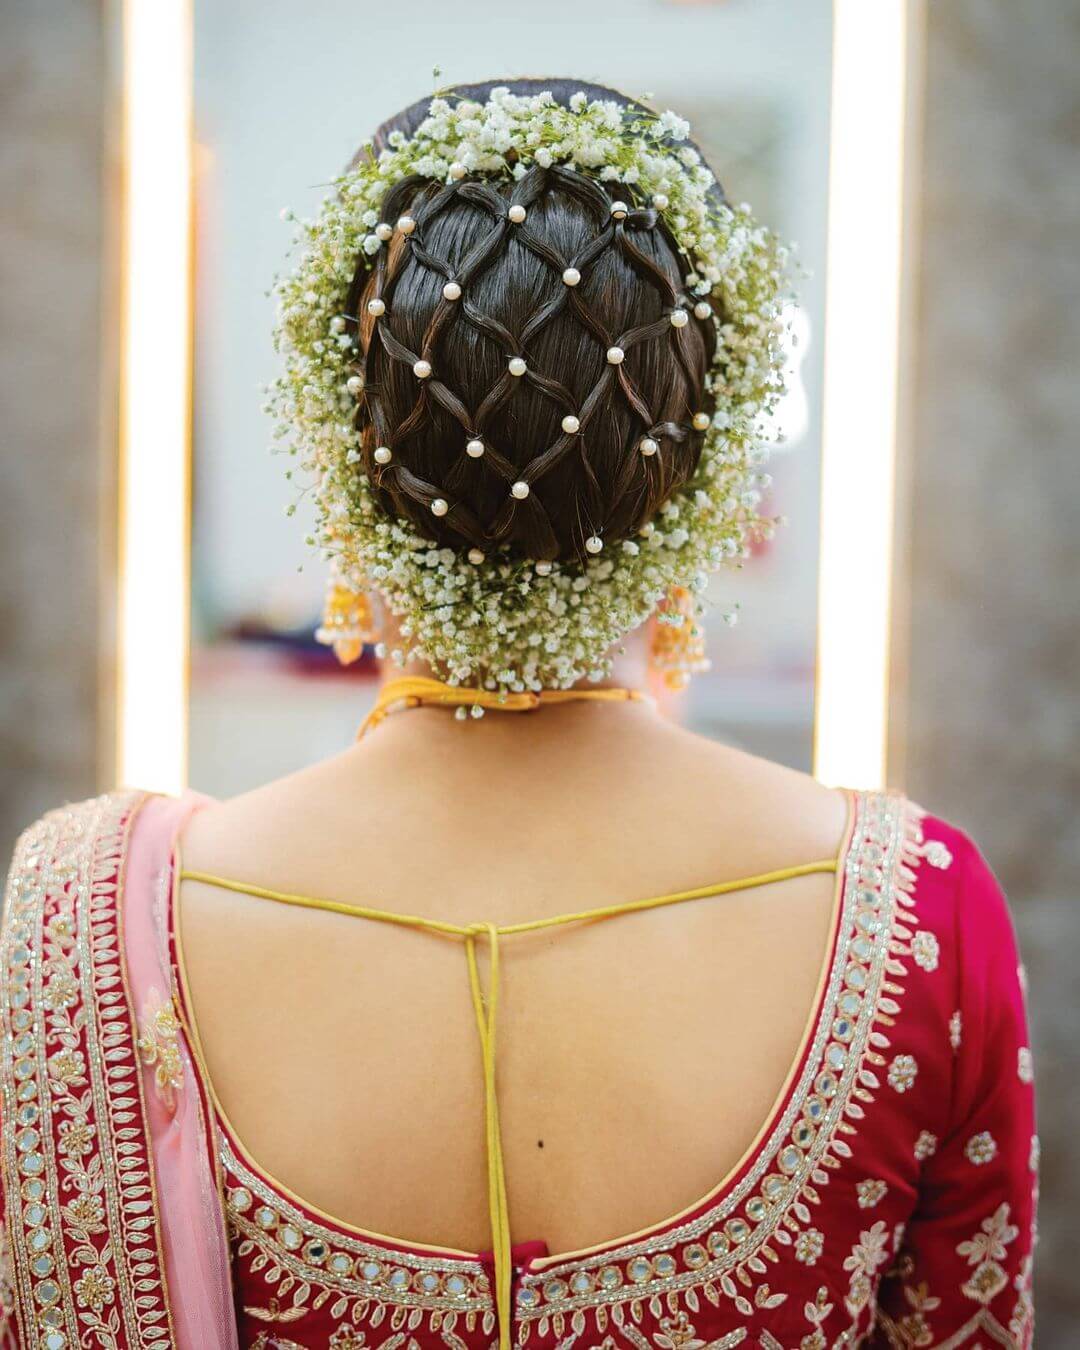 25 DroolWorthy Bun Hairstyles for ToBe Brides  WeddingBazaar